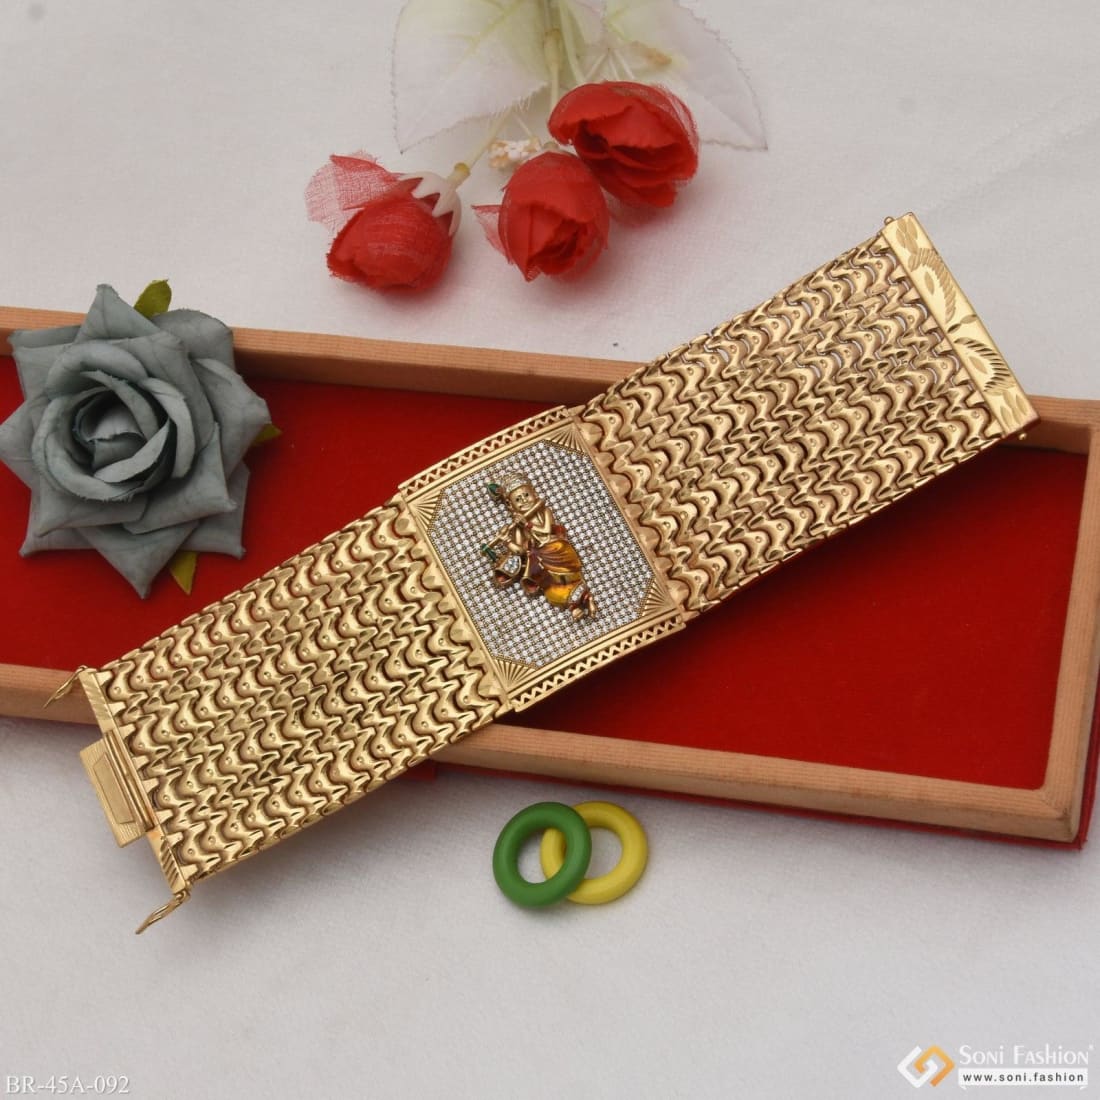 Etched Design Hand Made Black Om With Diamond Gold Plated Bracelet - Style  A247 at Rs 2800.00 | गोल्ड प्लेटेड ब्रेसलेट - Soni Fashion, Rajkot | ID:  24683809555